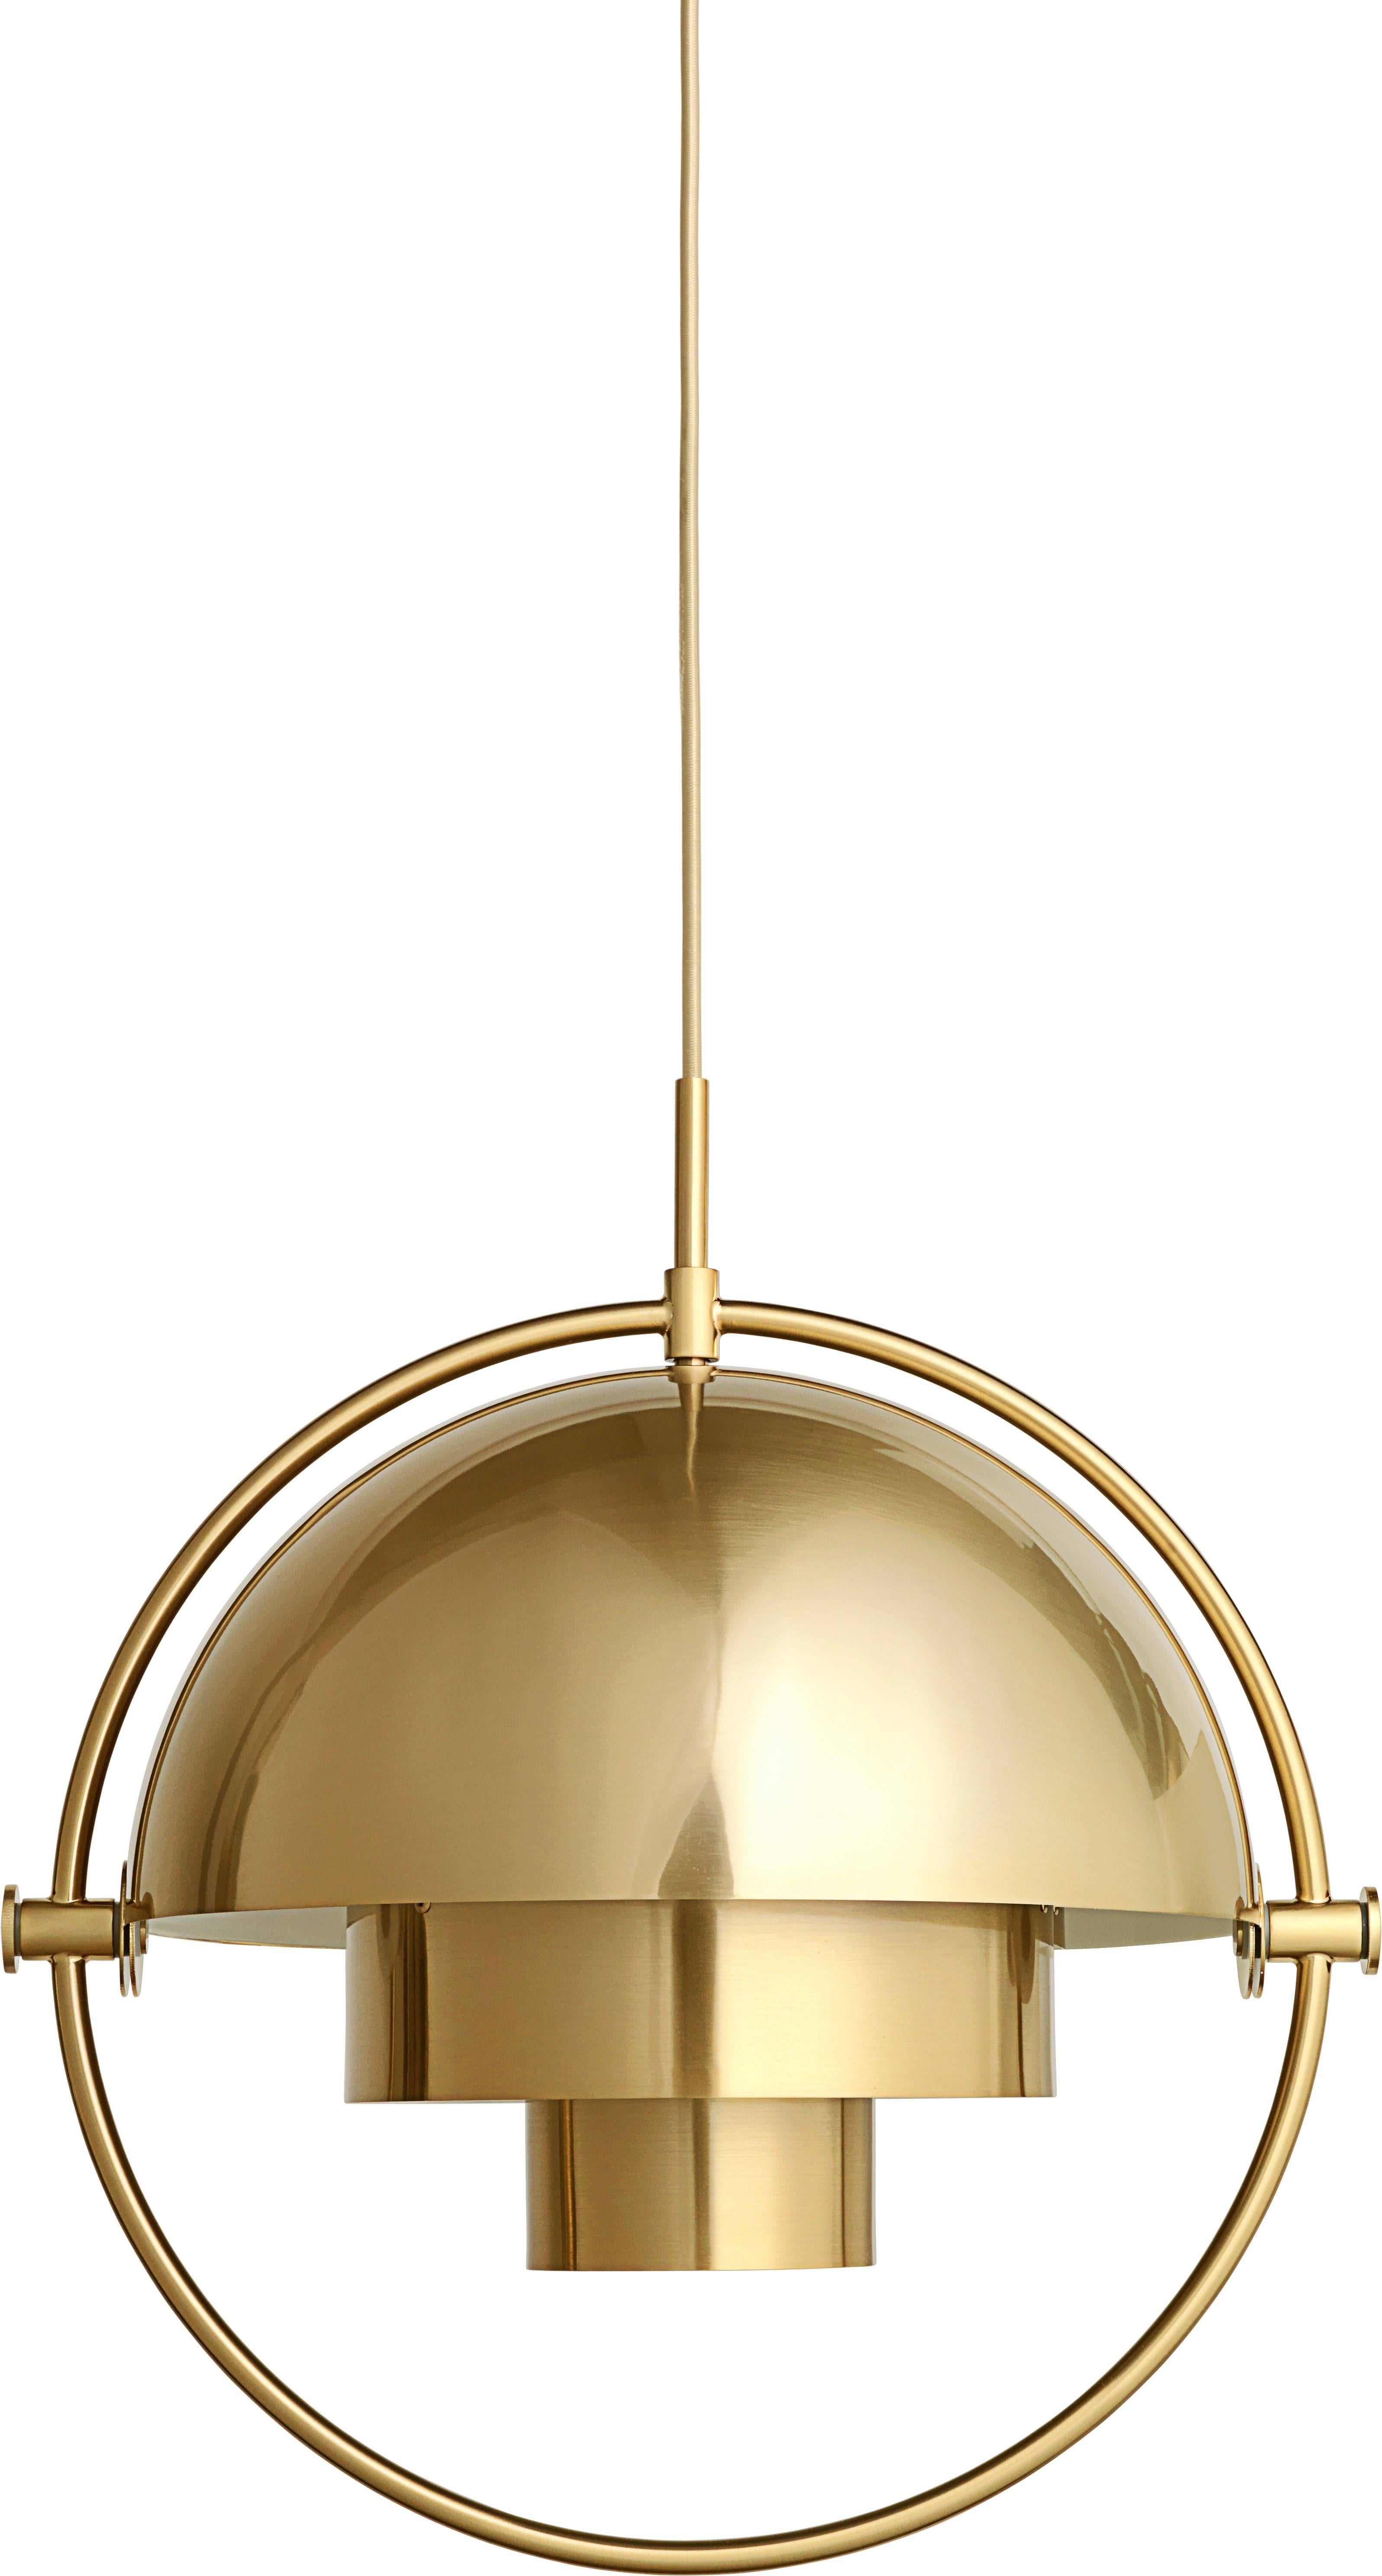 Painted Louis Weisdorf 'Multi-Lite' Pendant Lamp in Black / Brass For Sale